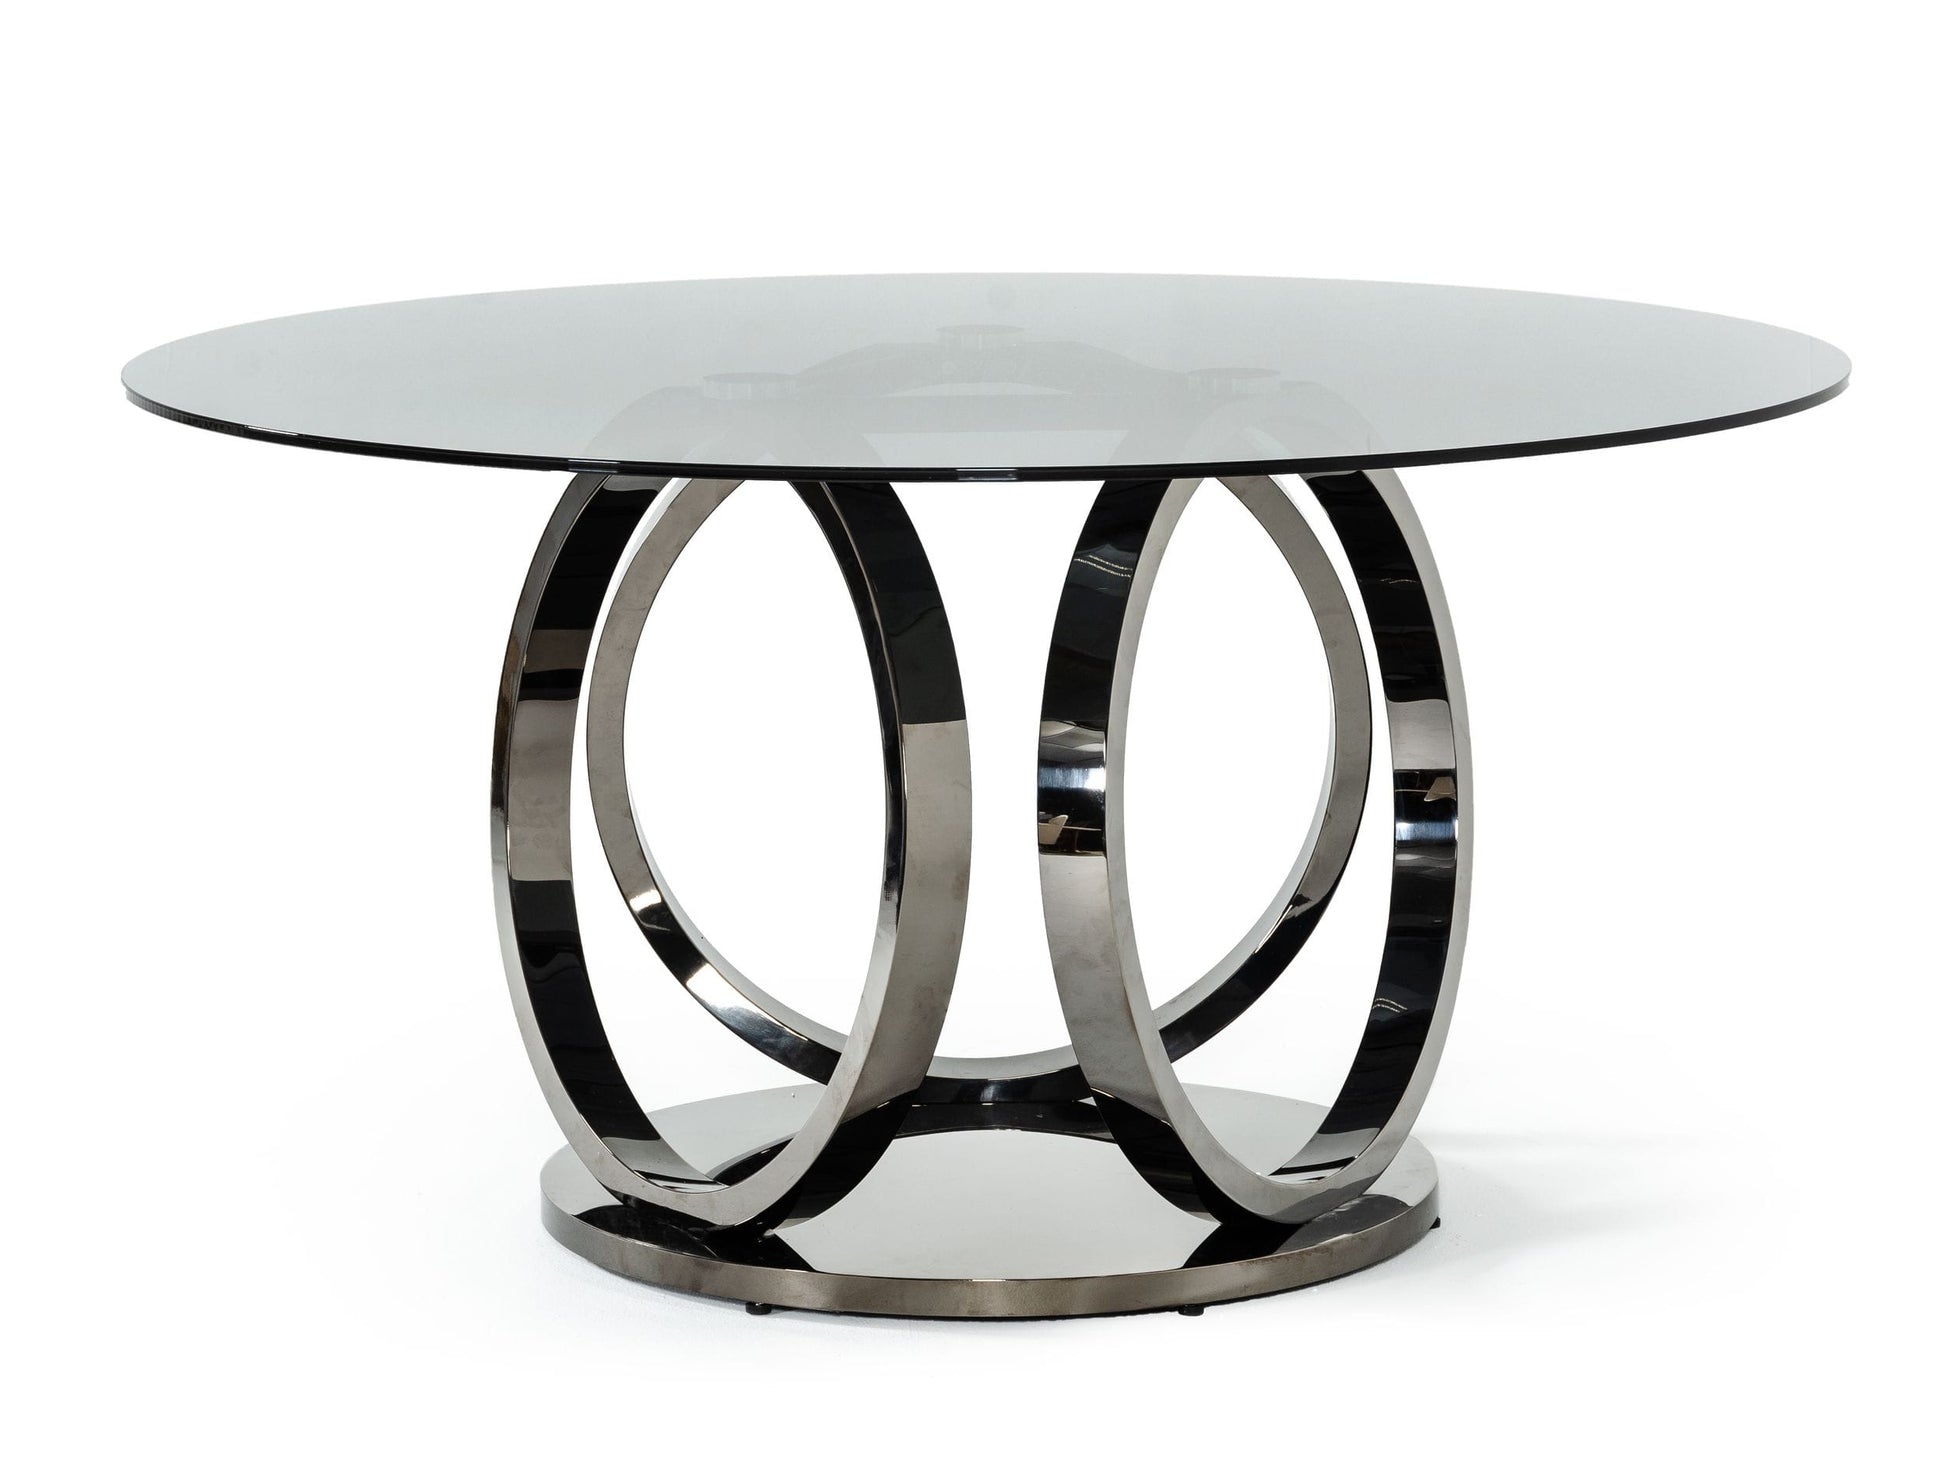 Modrest Babia Modern Smoked Glass & Walnut Extendable Dining Table